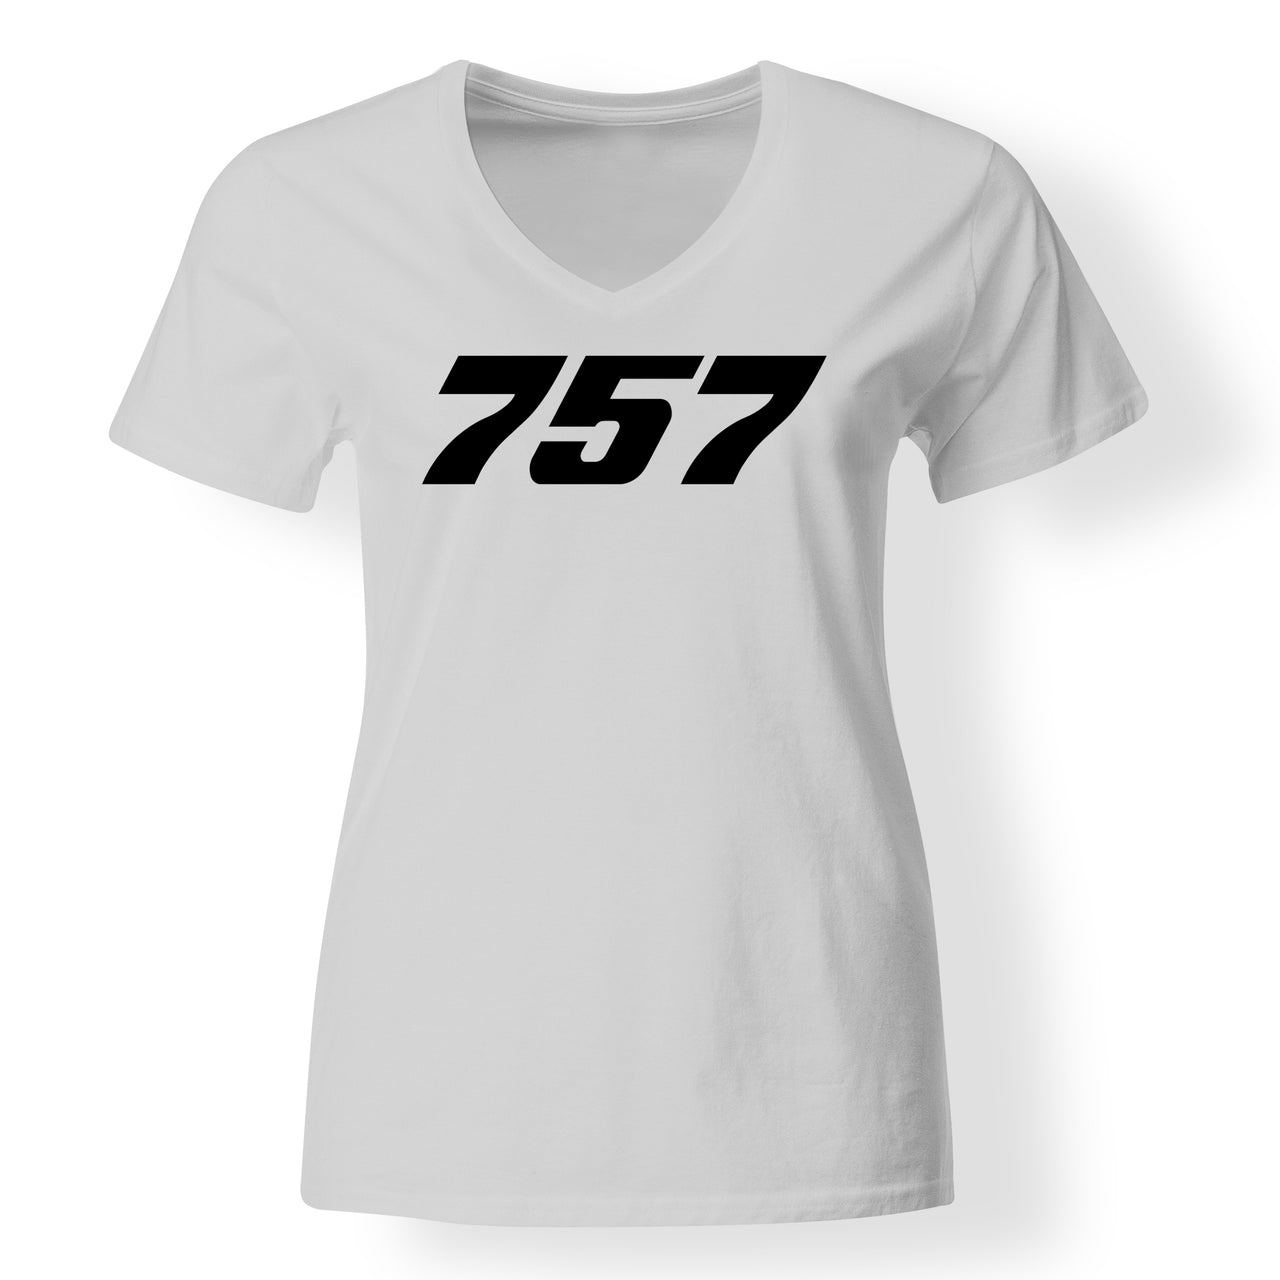 757 Flat Text Designed V-Neck T-Shirts